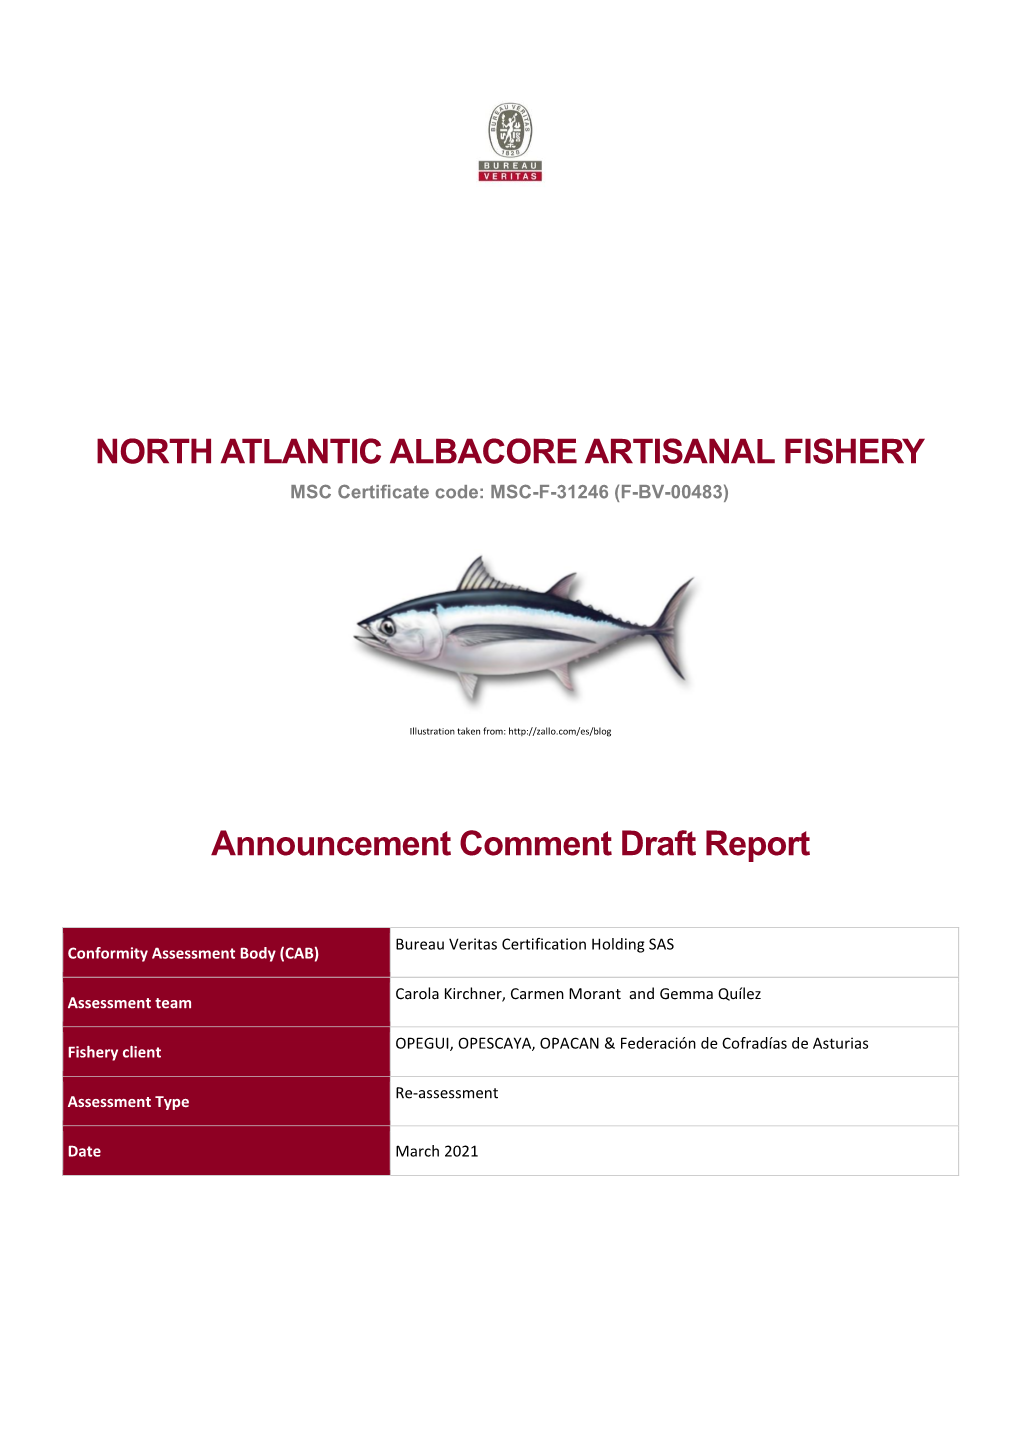 NORTH ATLANTIC ALBACORE ARTISANAL FISHERY MSC Certificate Code: MSC-F-31246 (F-BV-00483)